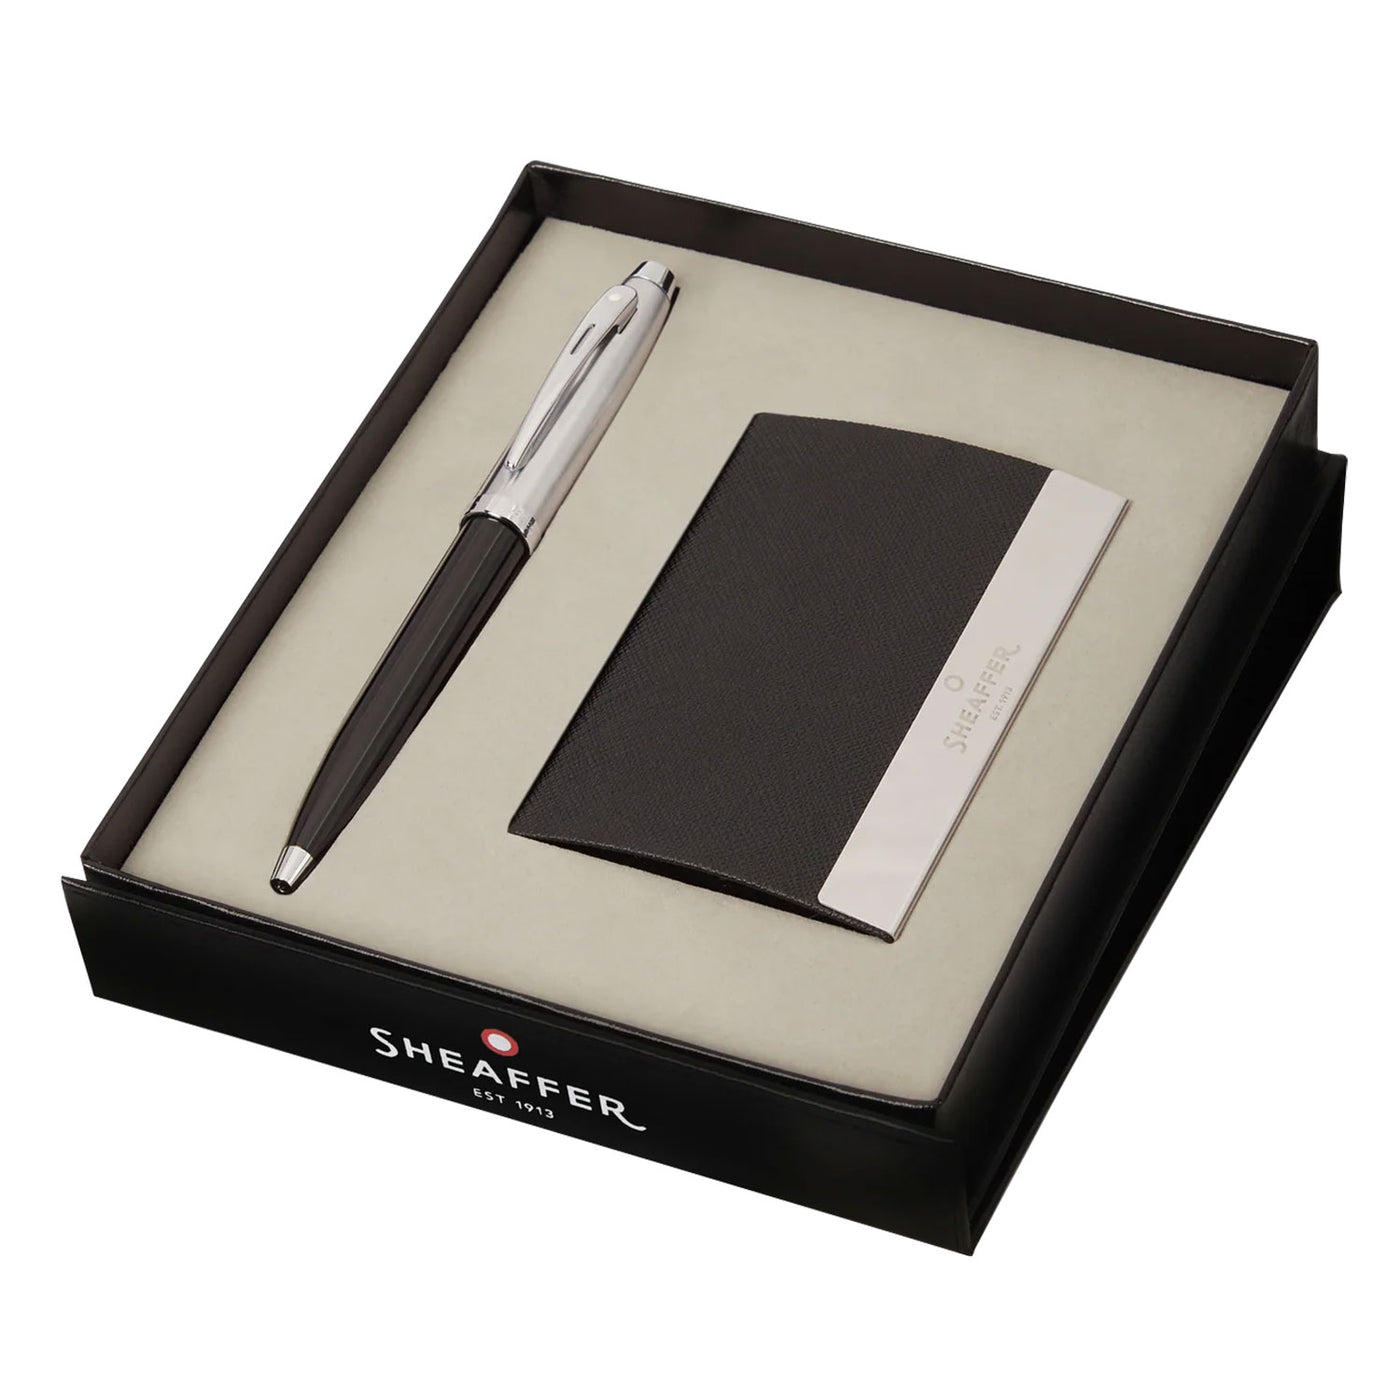 Sheaffer Gift Set - 100 Series Glossy Black & Chrome CT Ball Pen with Business Card Holder 1